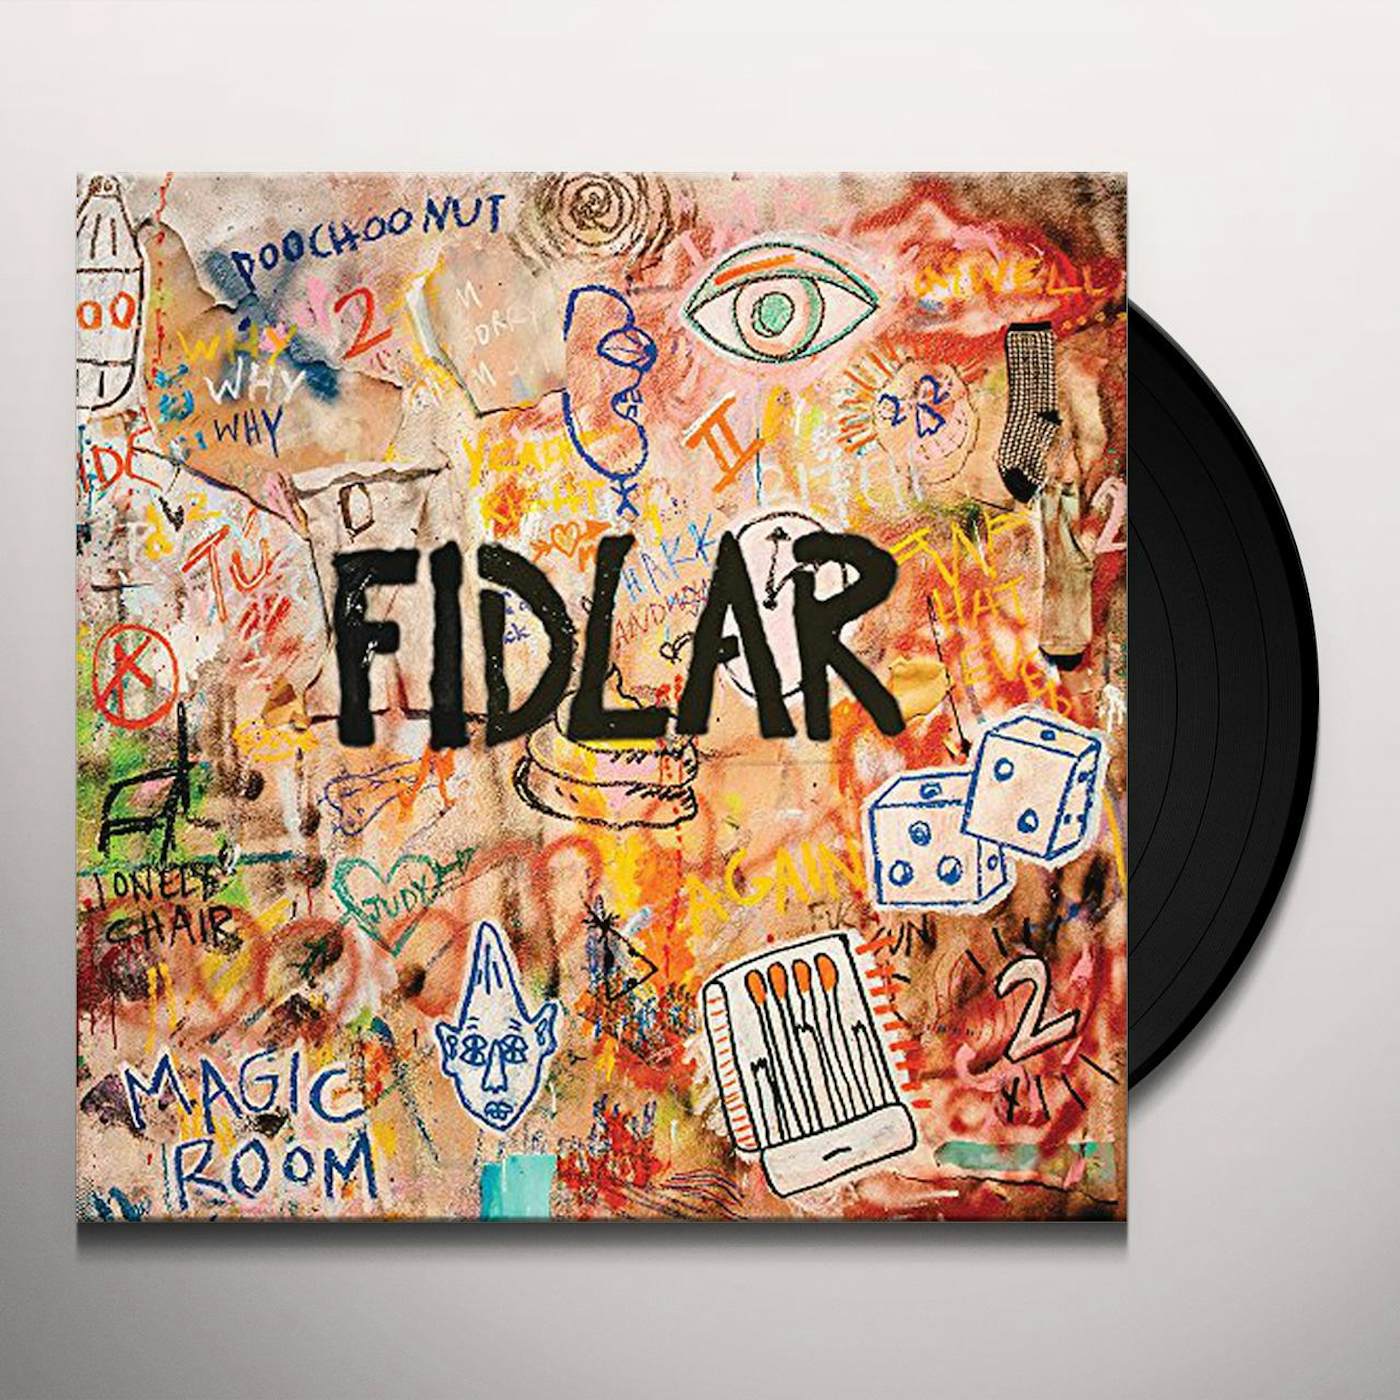 FIDLAR TOO (SWIRL) Vinyl Record